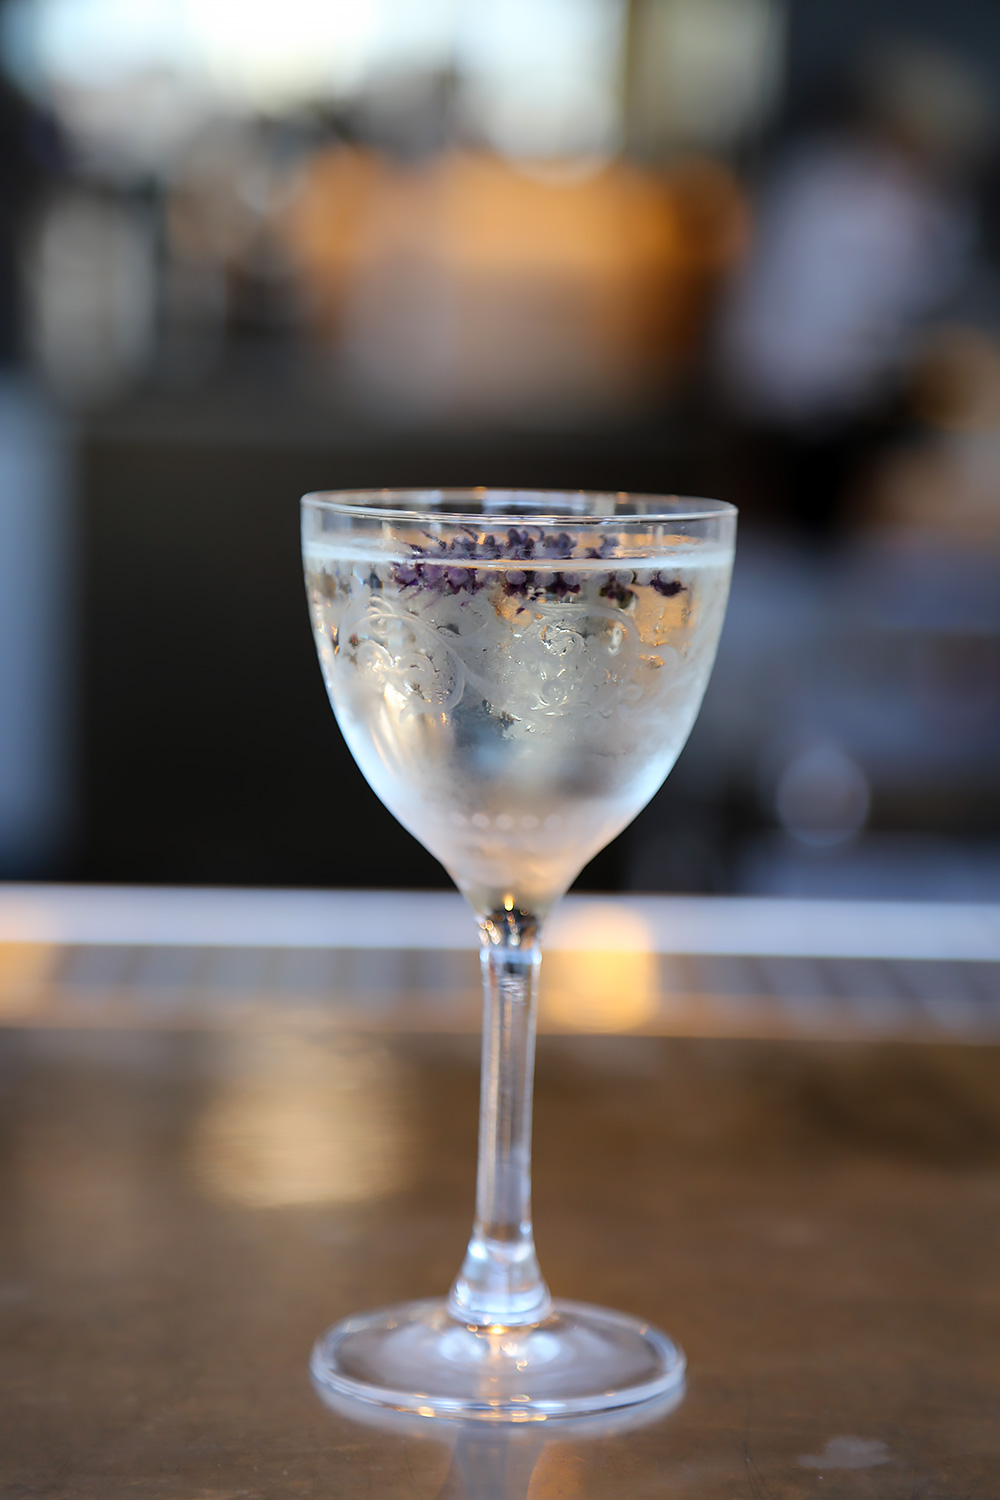 Cocktail: Chile vodka-forward “Basil” mellowed with eau de vie and Dimmi.